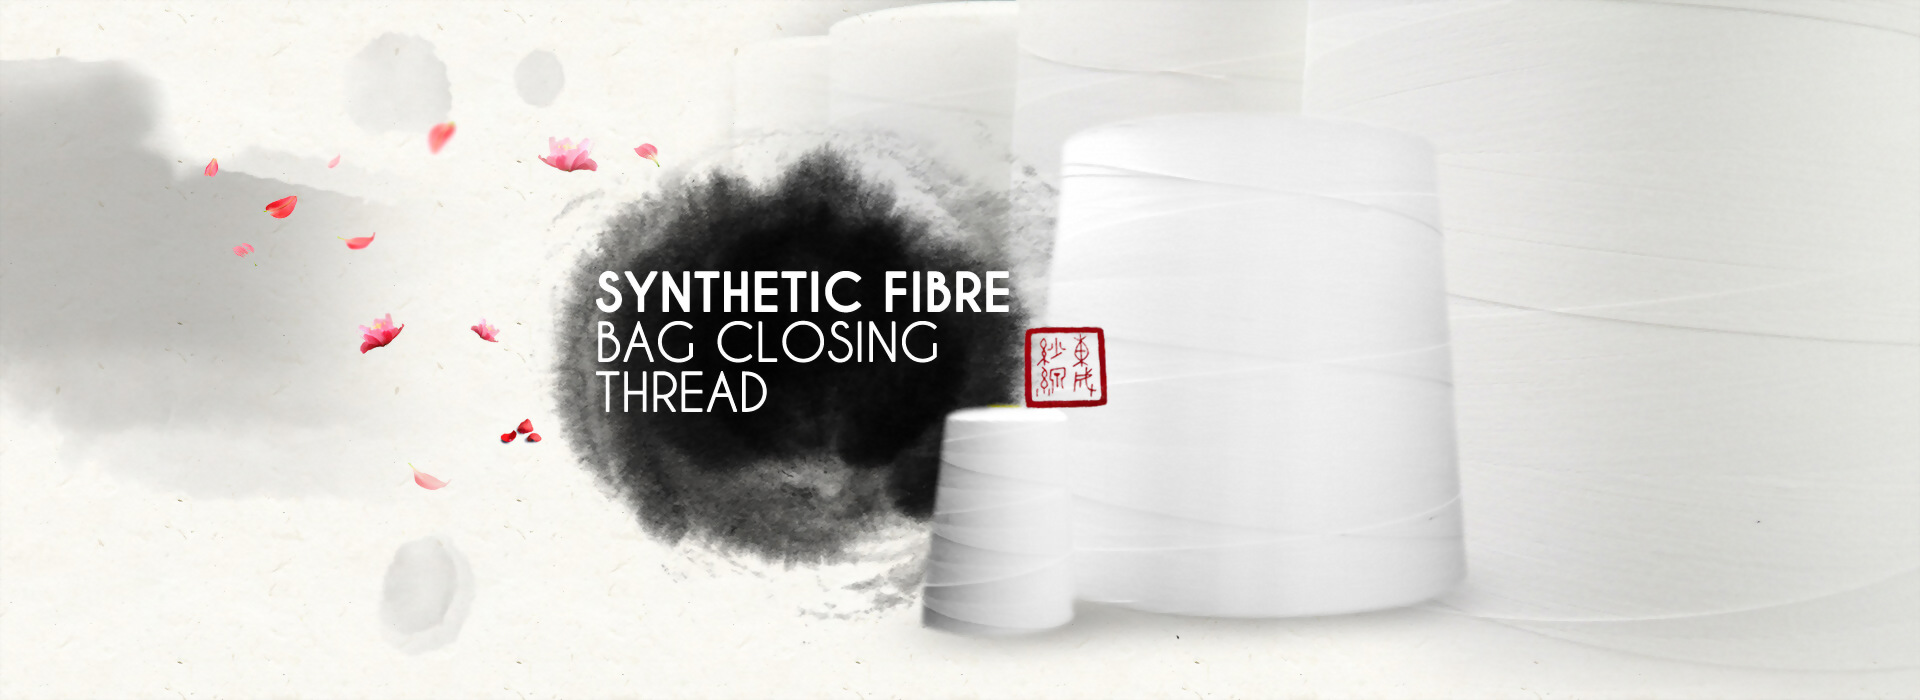 Polypropylene bag closing thread